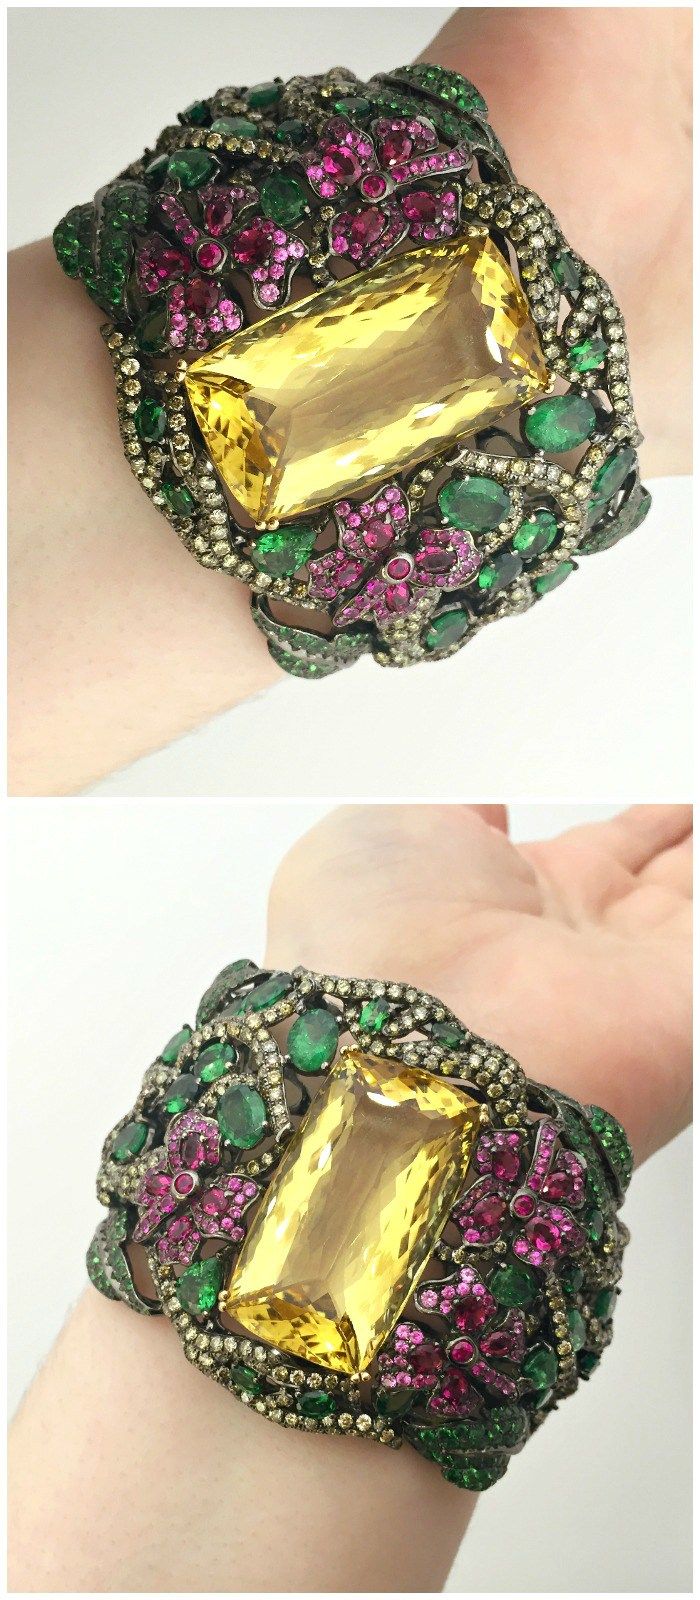 A beautiful and dramatic gemstone cuff by Wendy Yue....